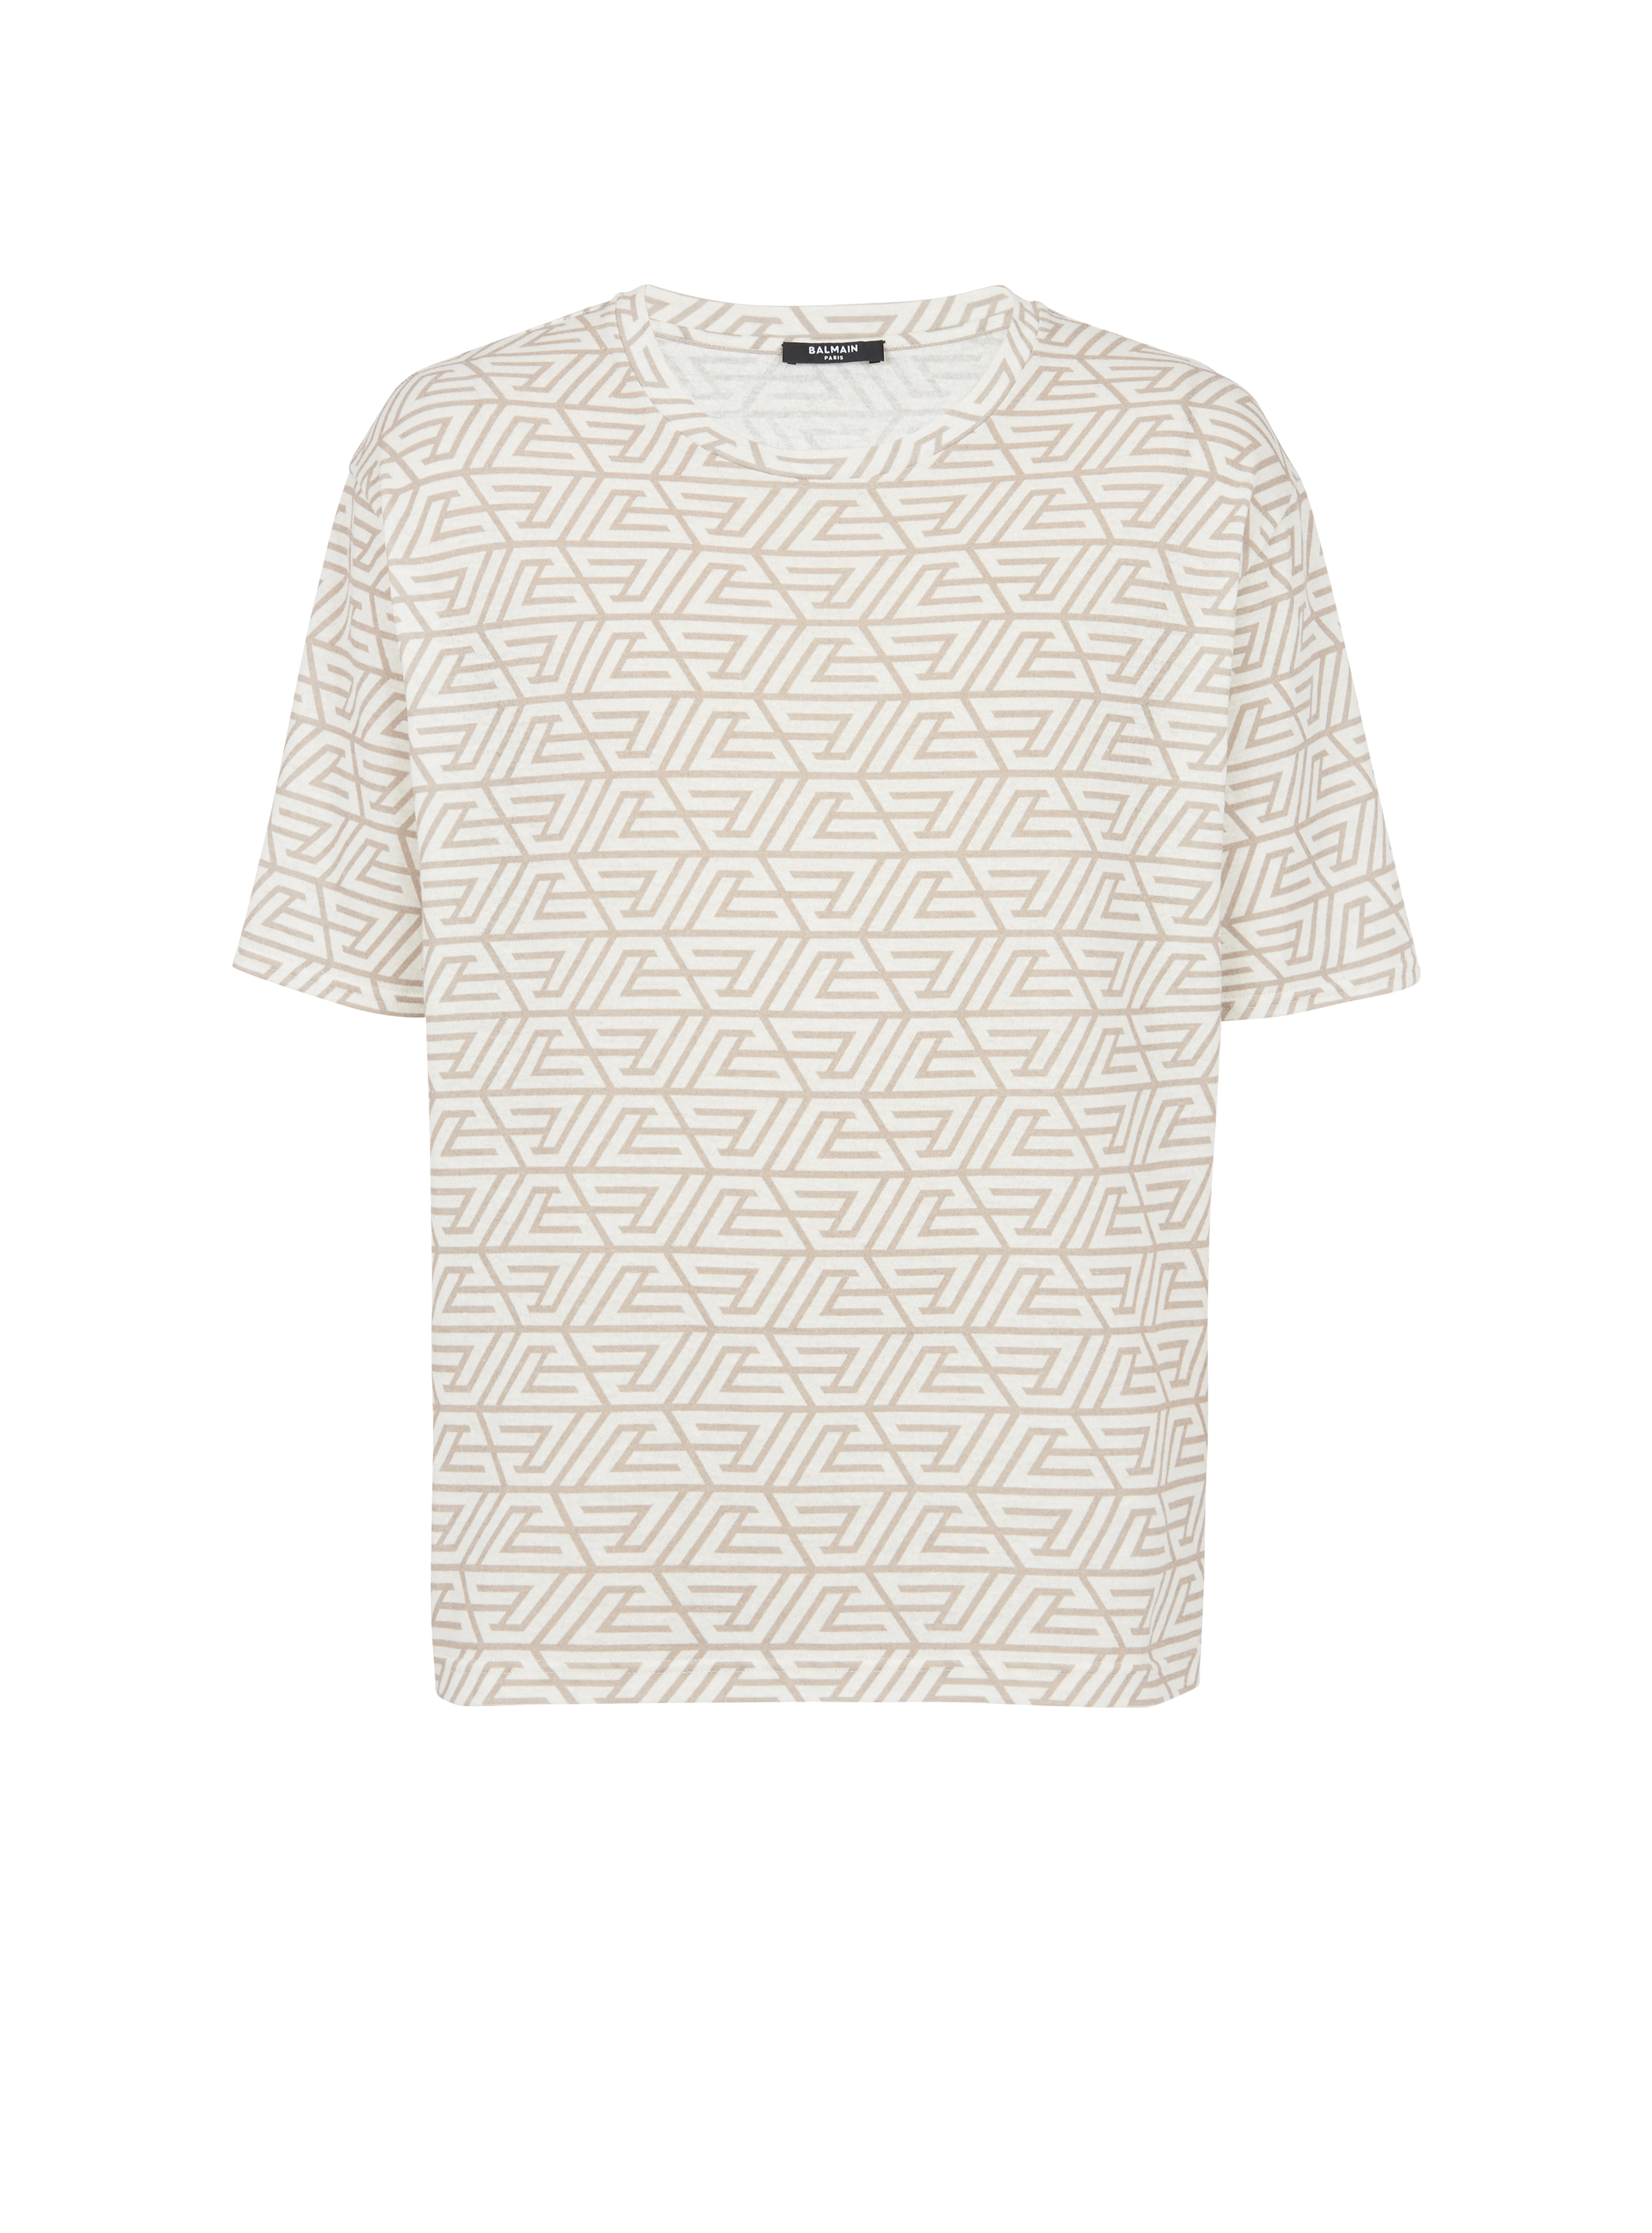 Cotton T-shirt with printed pyramid monogram, khaki